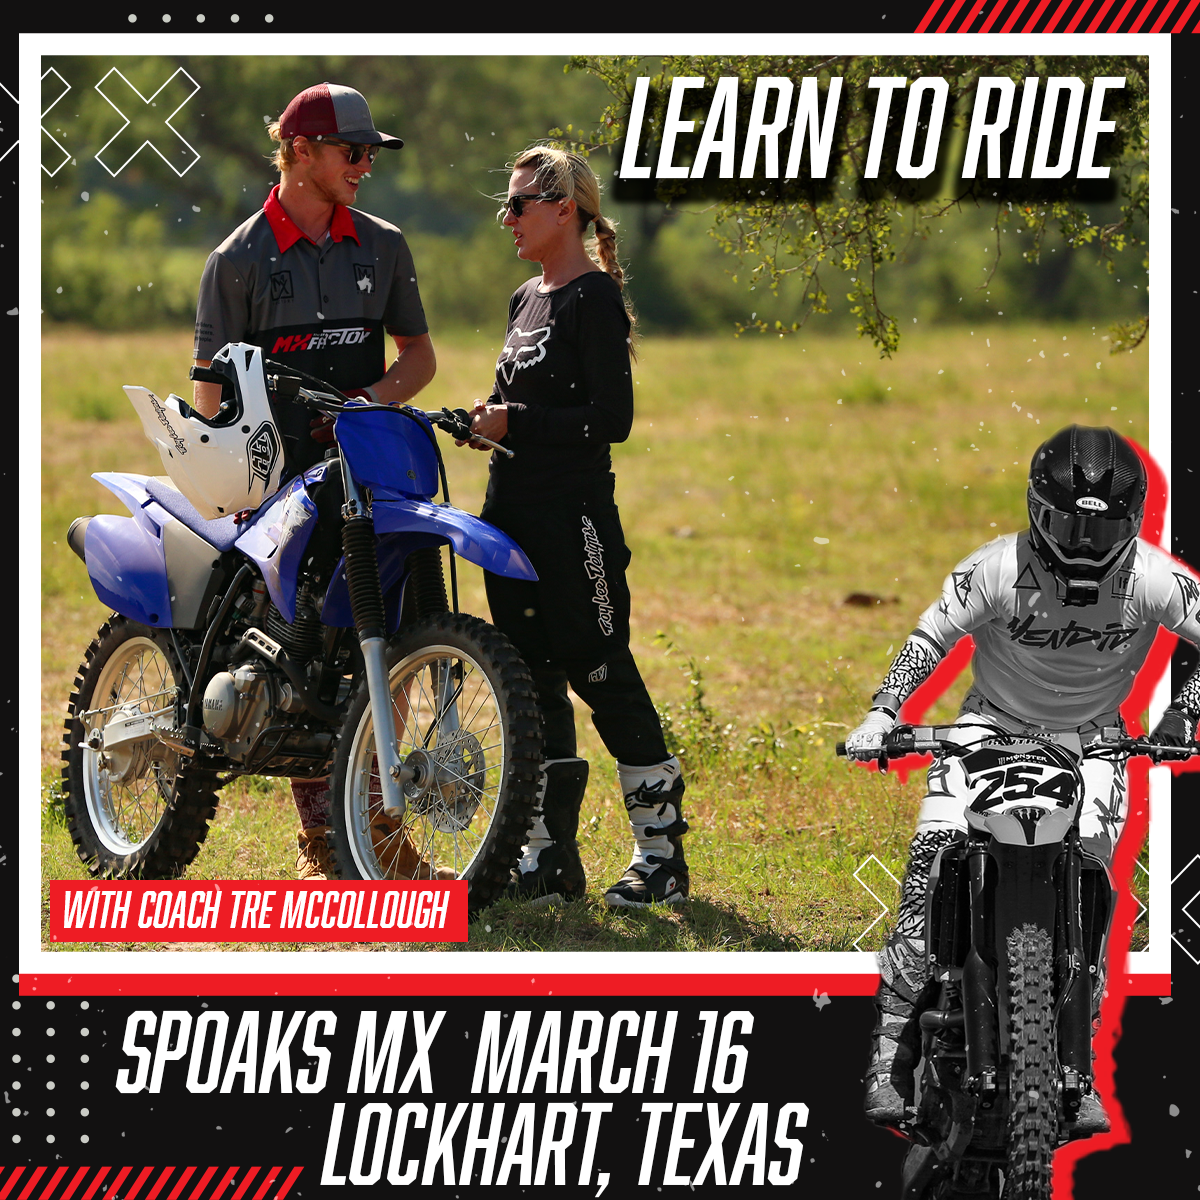 LearnToRide: Lockhart, Texas | March 16